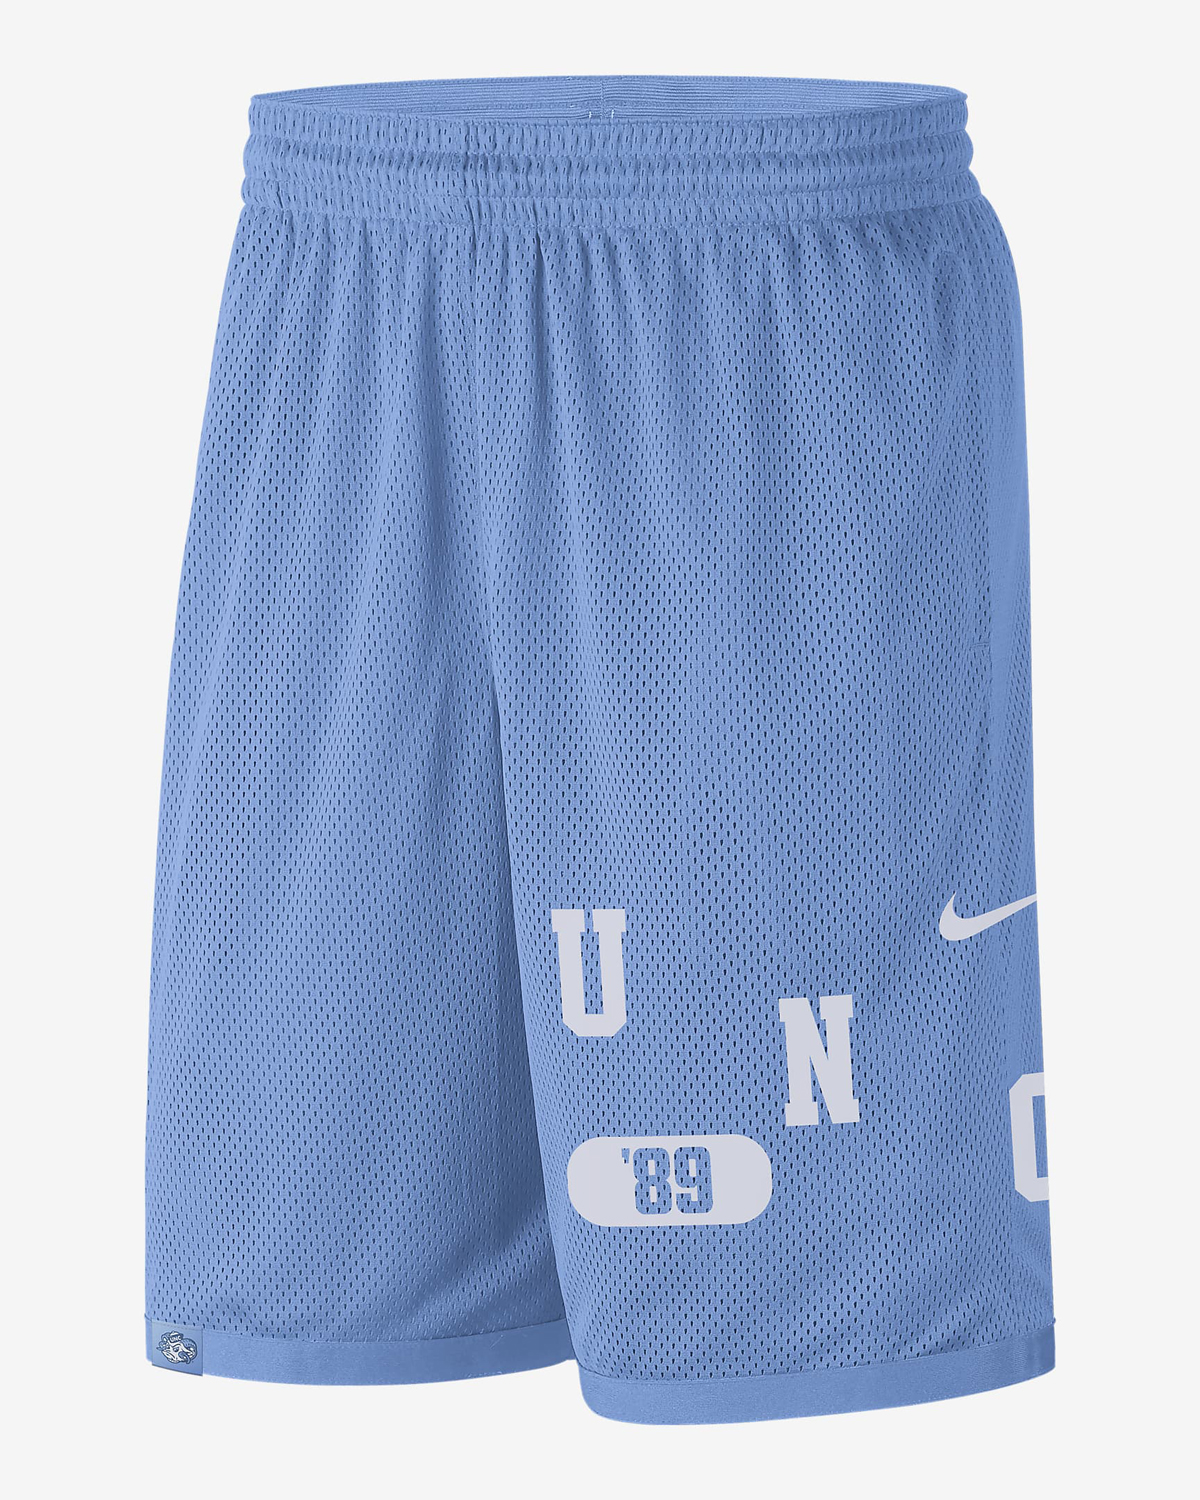 Nike-UNC-Tar-Heels-Mesh-Shorts